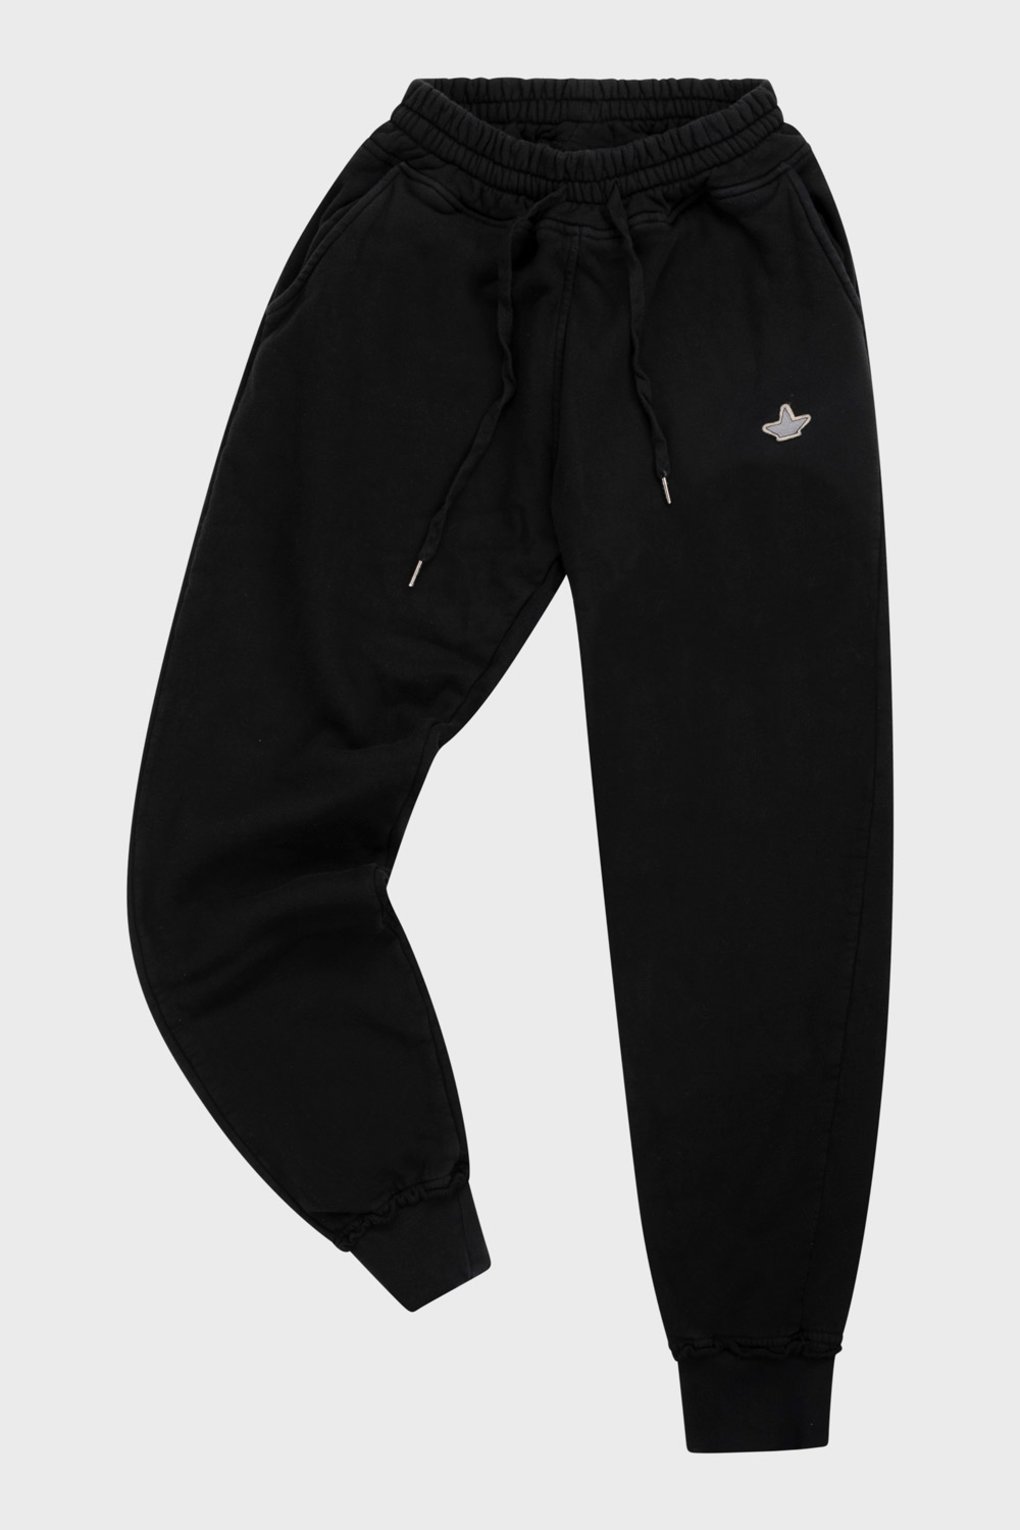 Pantalone in tuta basico con logo - Black